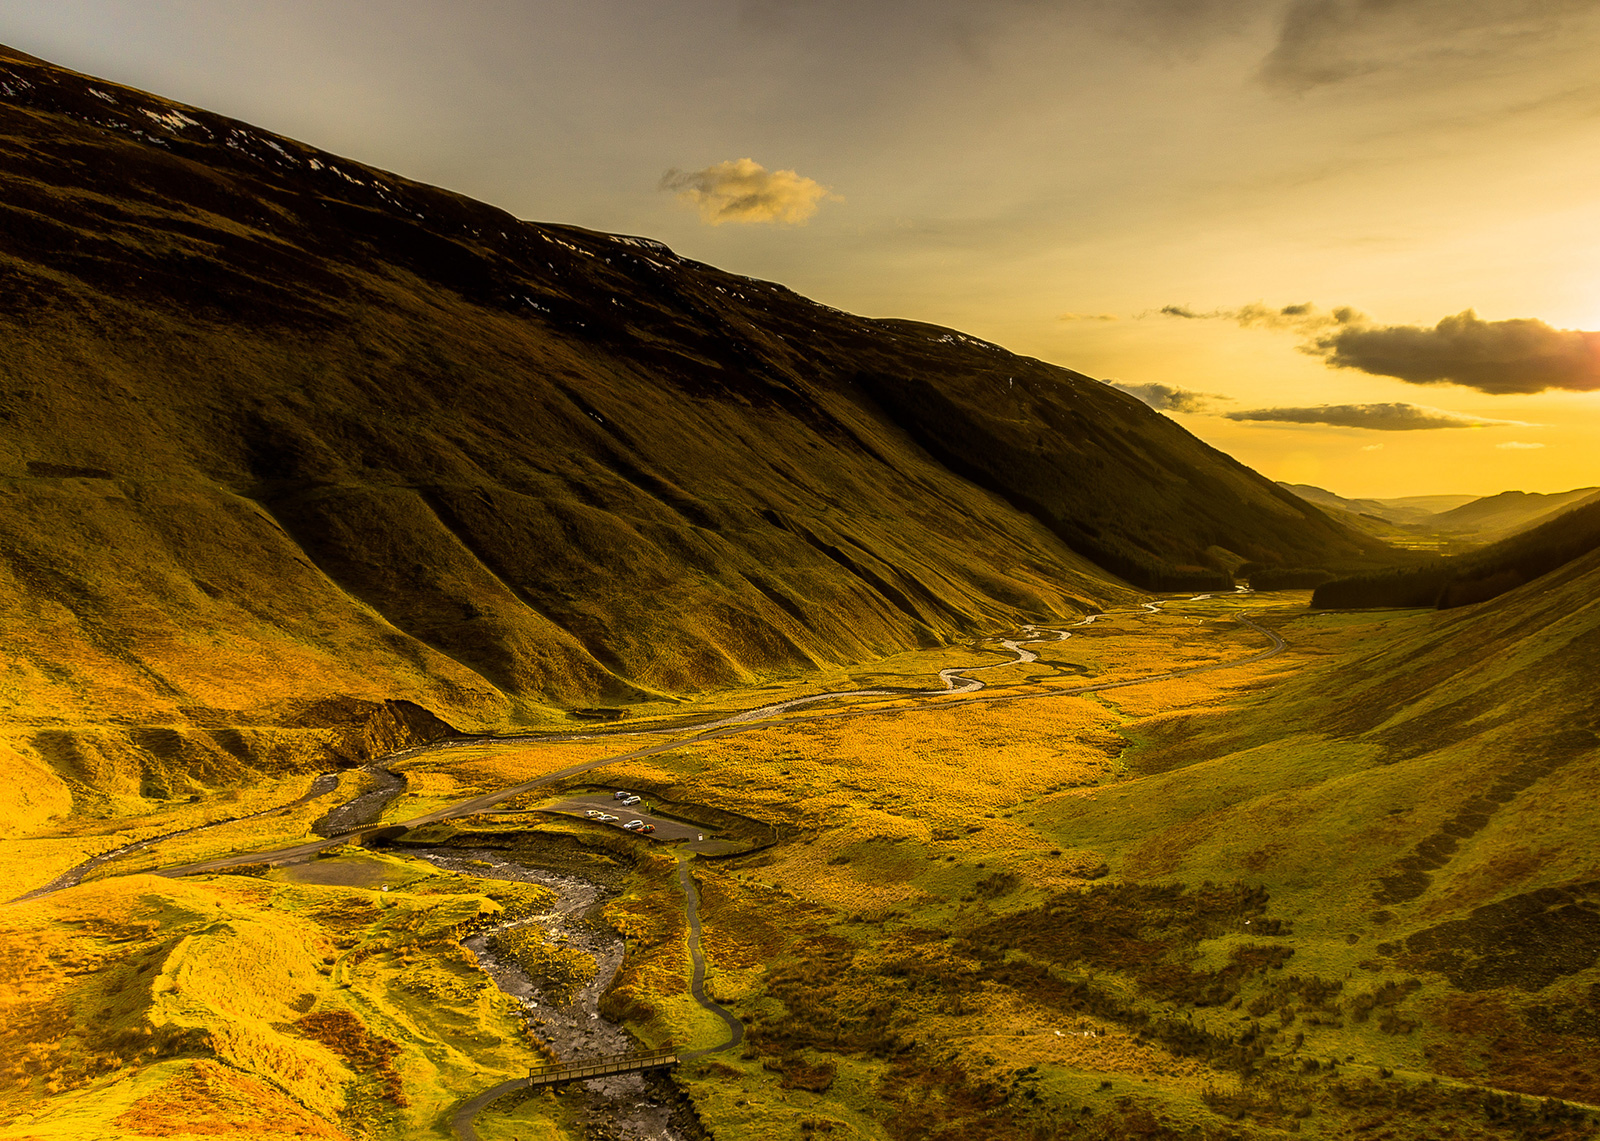 Light Blankets the Valley, Scotland, United Kingdom